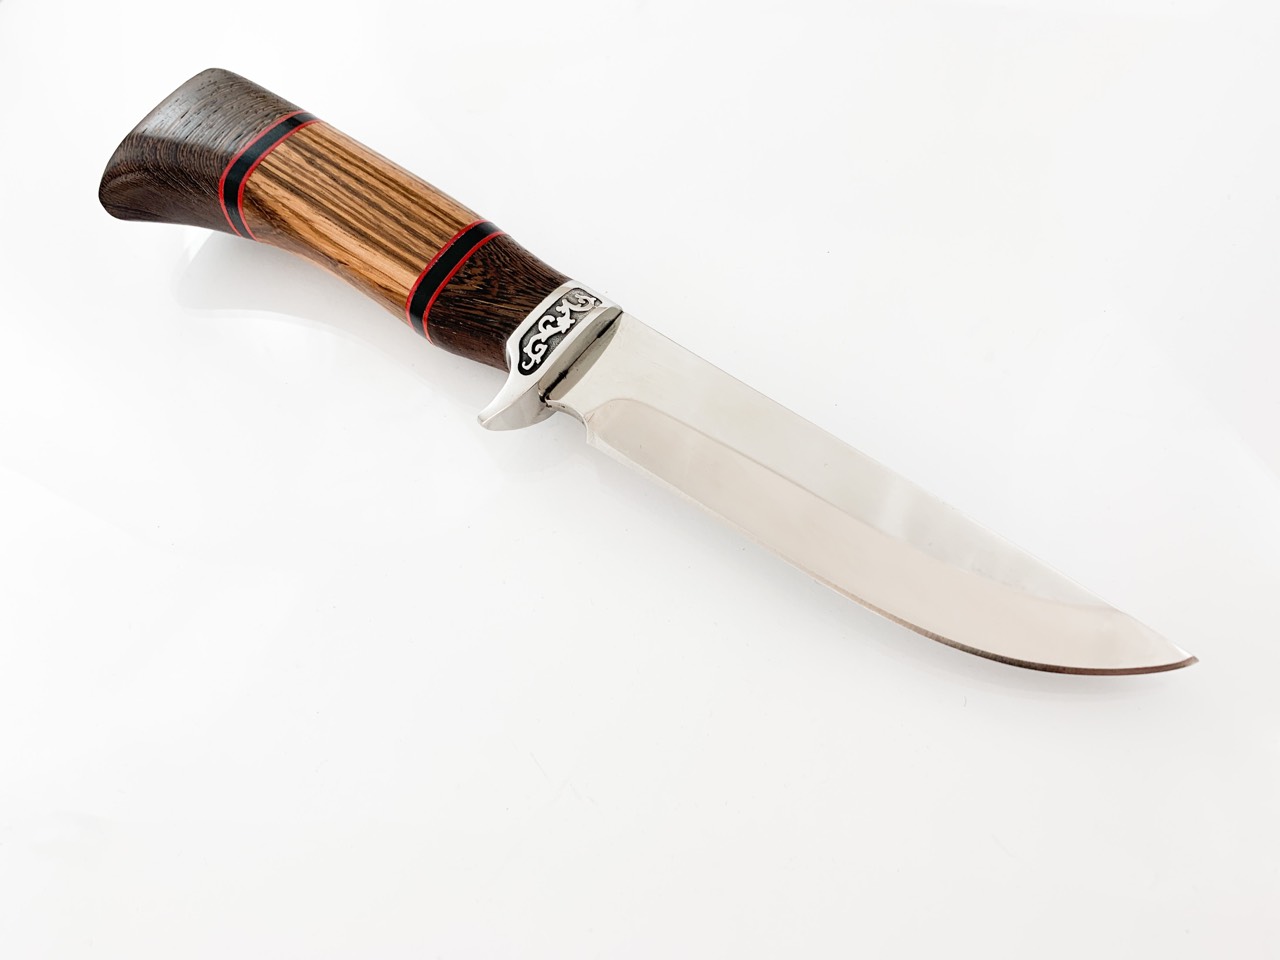 Великолепен ловен нож с метален гард инкрустиран с флорални елементи и надпис - Лев